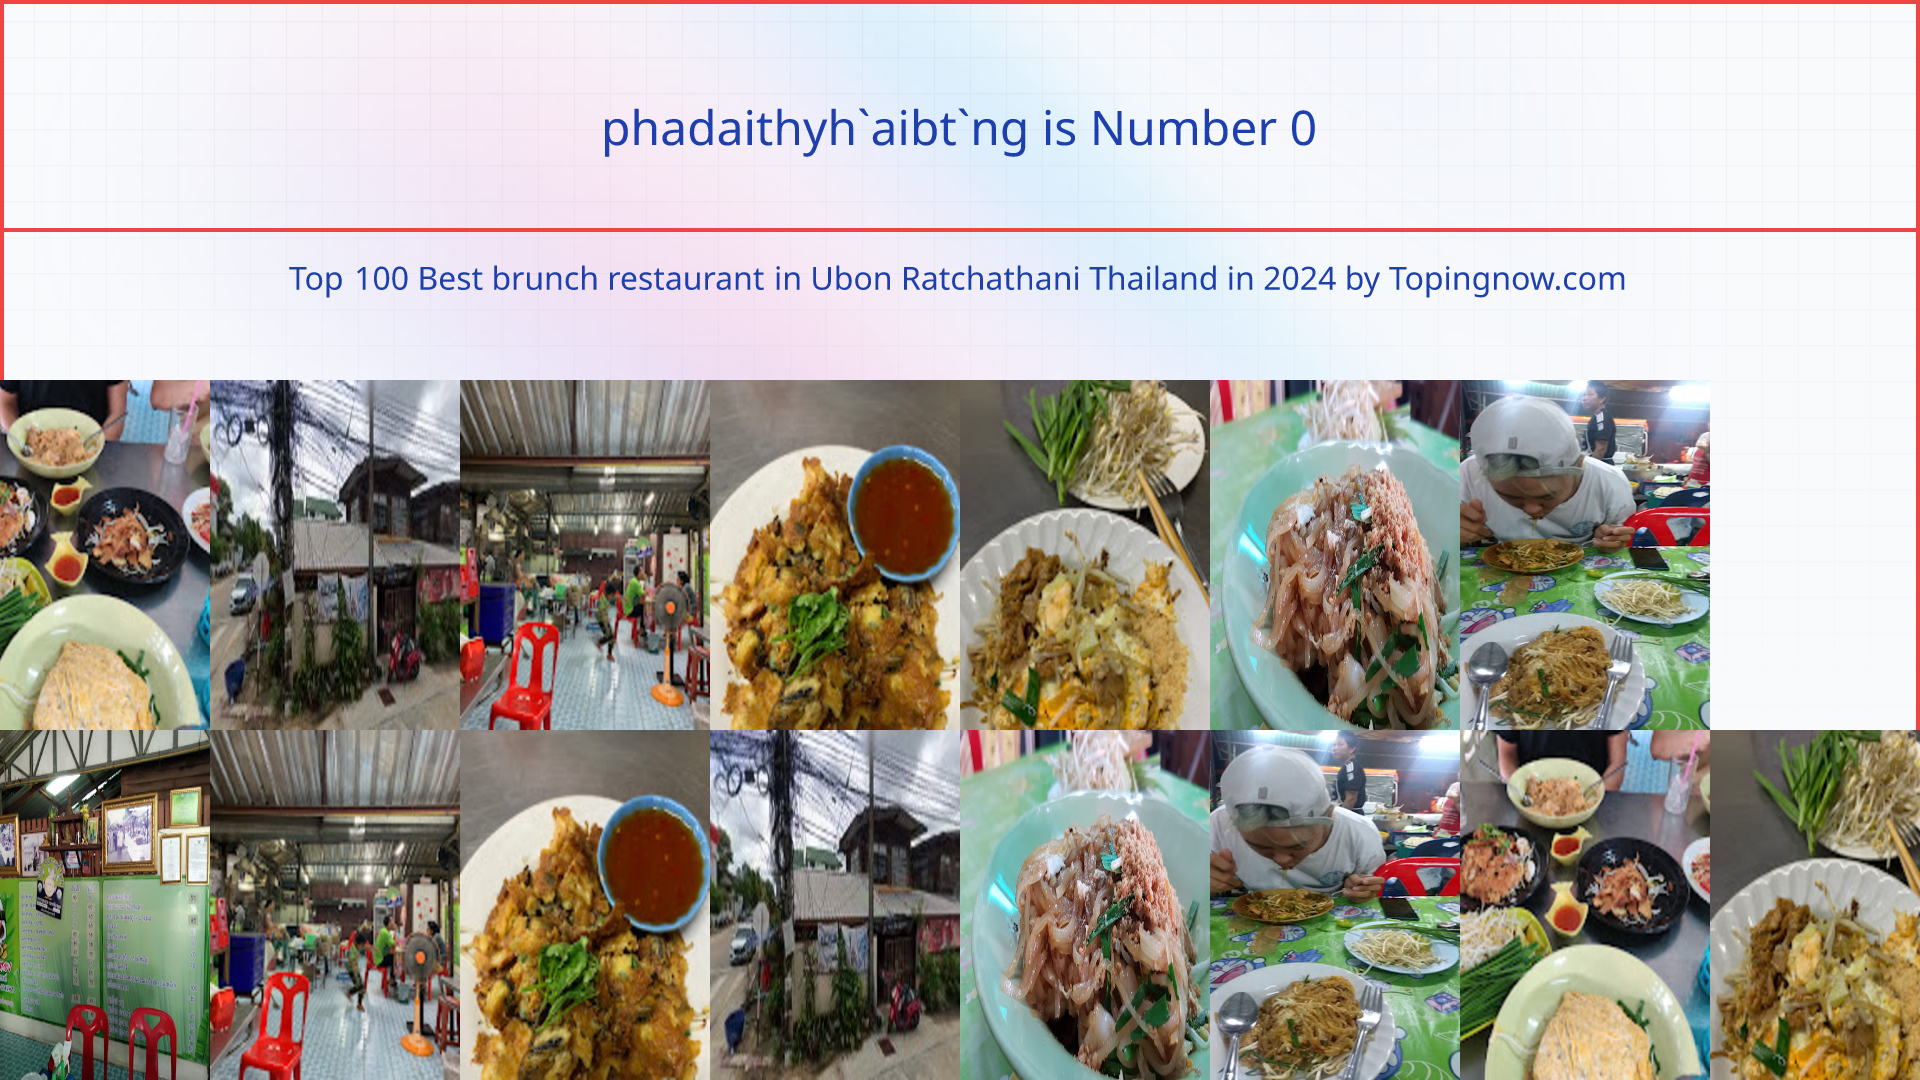 phadaithyh`aibt`ng: Top 100 Best brunch restaurant in Ubon Ratchathani Thailand in 2024